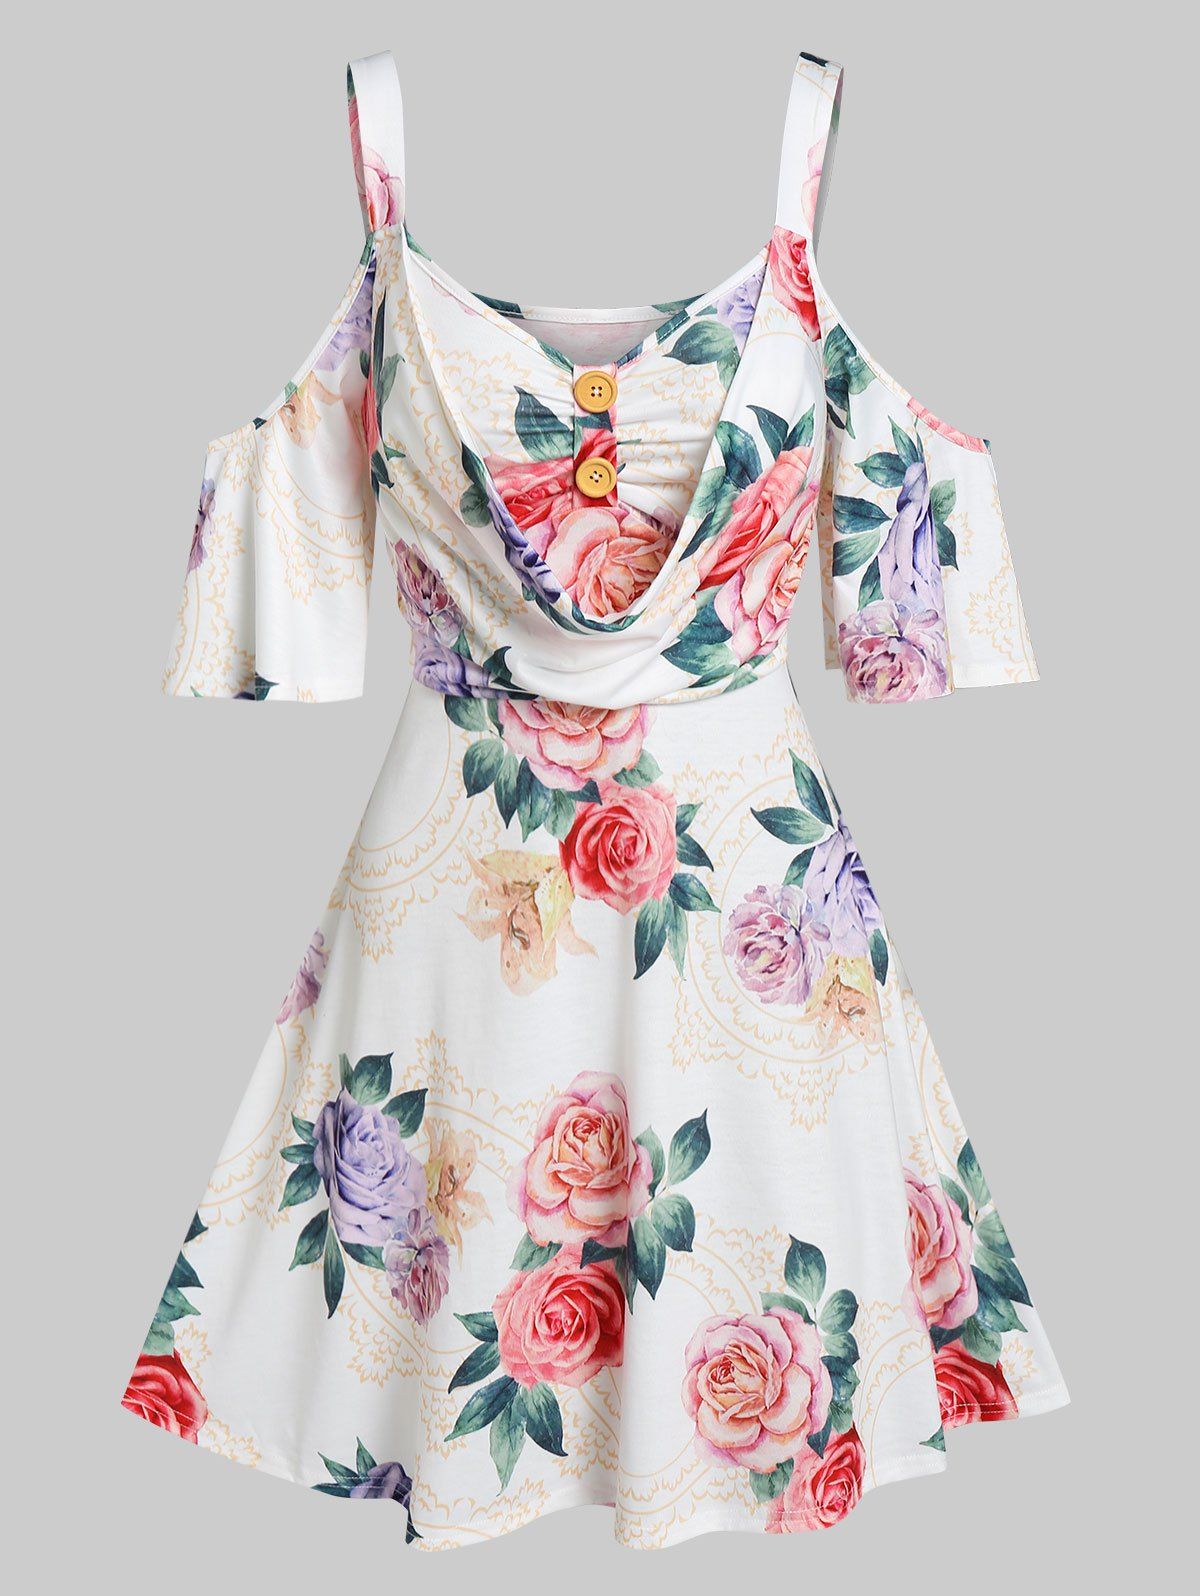 Flower Print Cold Shoulder 2 In 1 Dress - WHITE XL